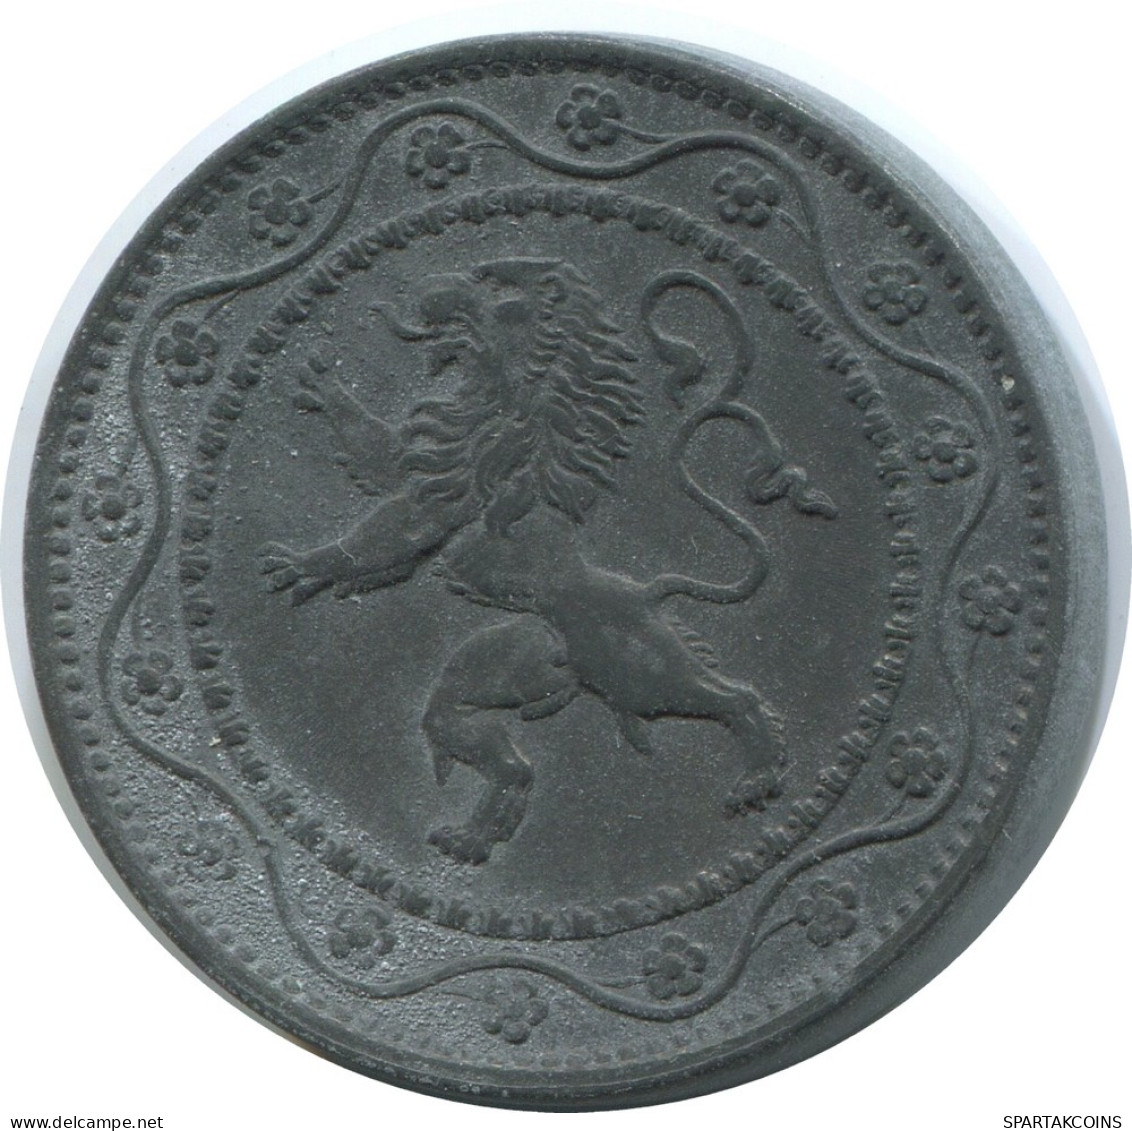 25 CENTIMES 1915 BELGIQUE-BELGIE BELGIEN BELGIUM Münze #AE735.16.D - 25 Centimes